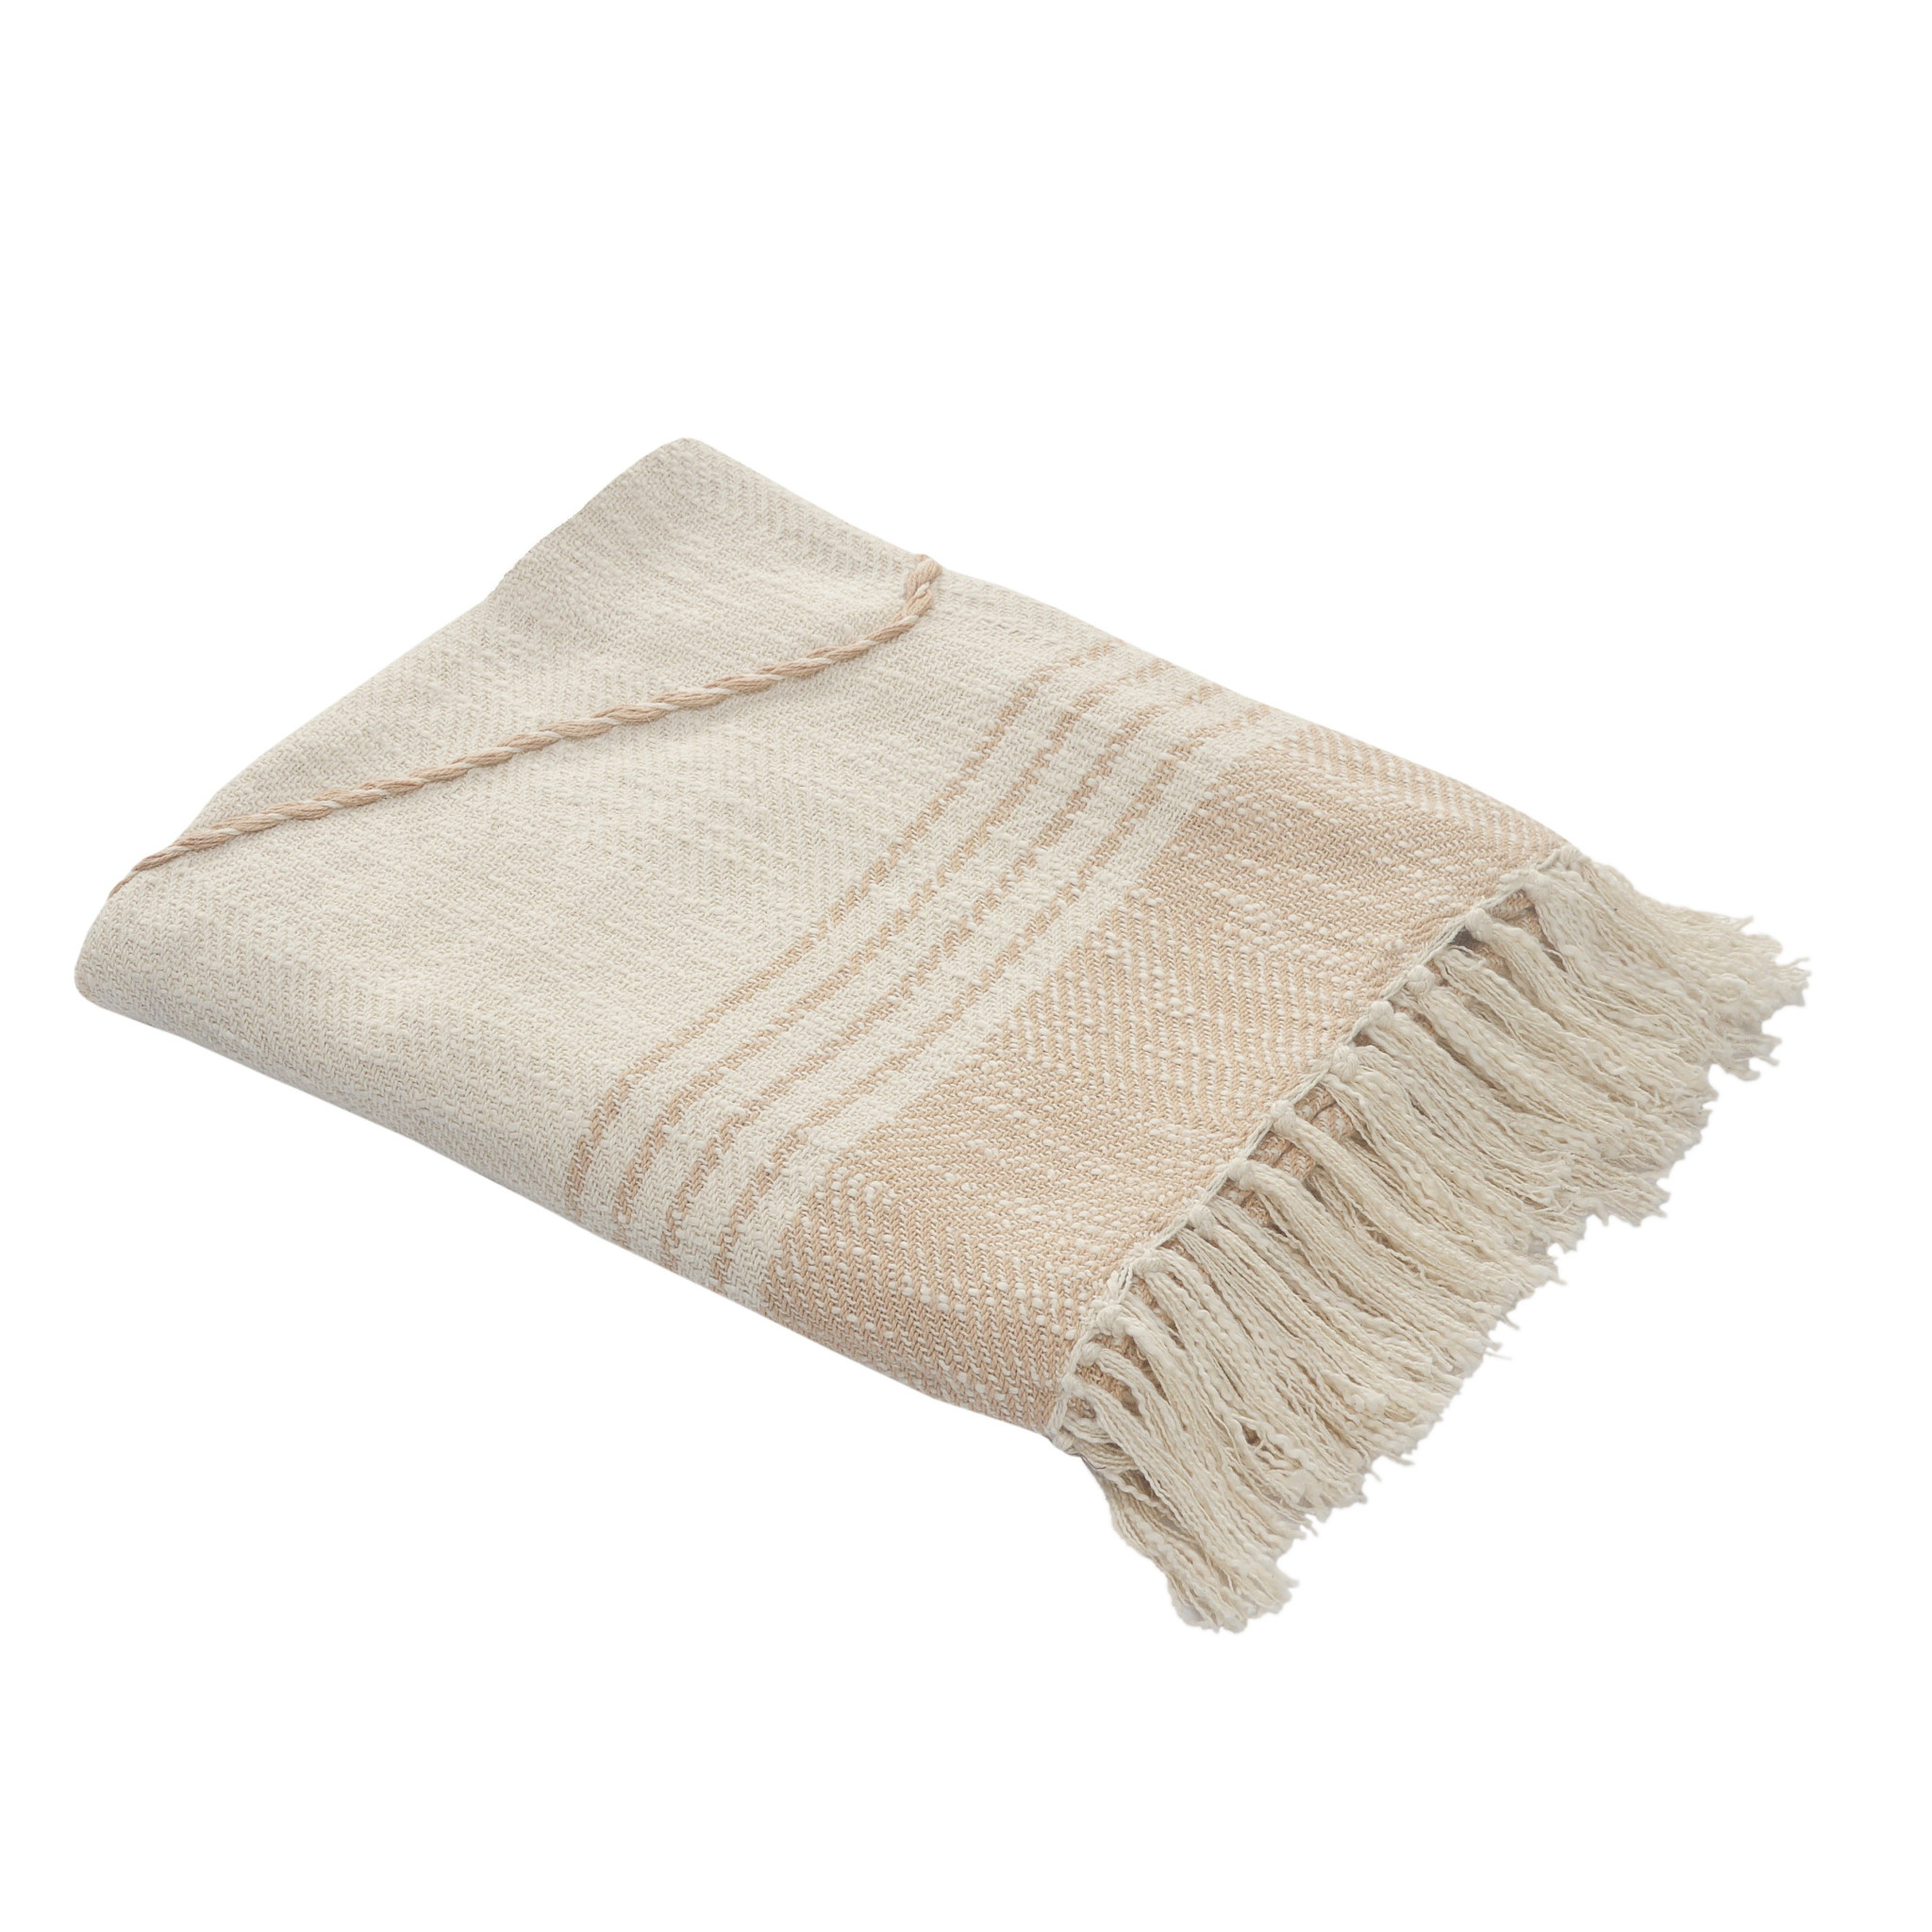 Beige Woven Cotton Striped Throw Blanket-516483-2